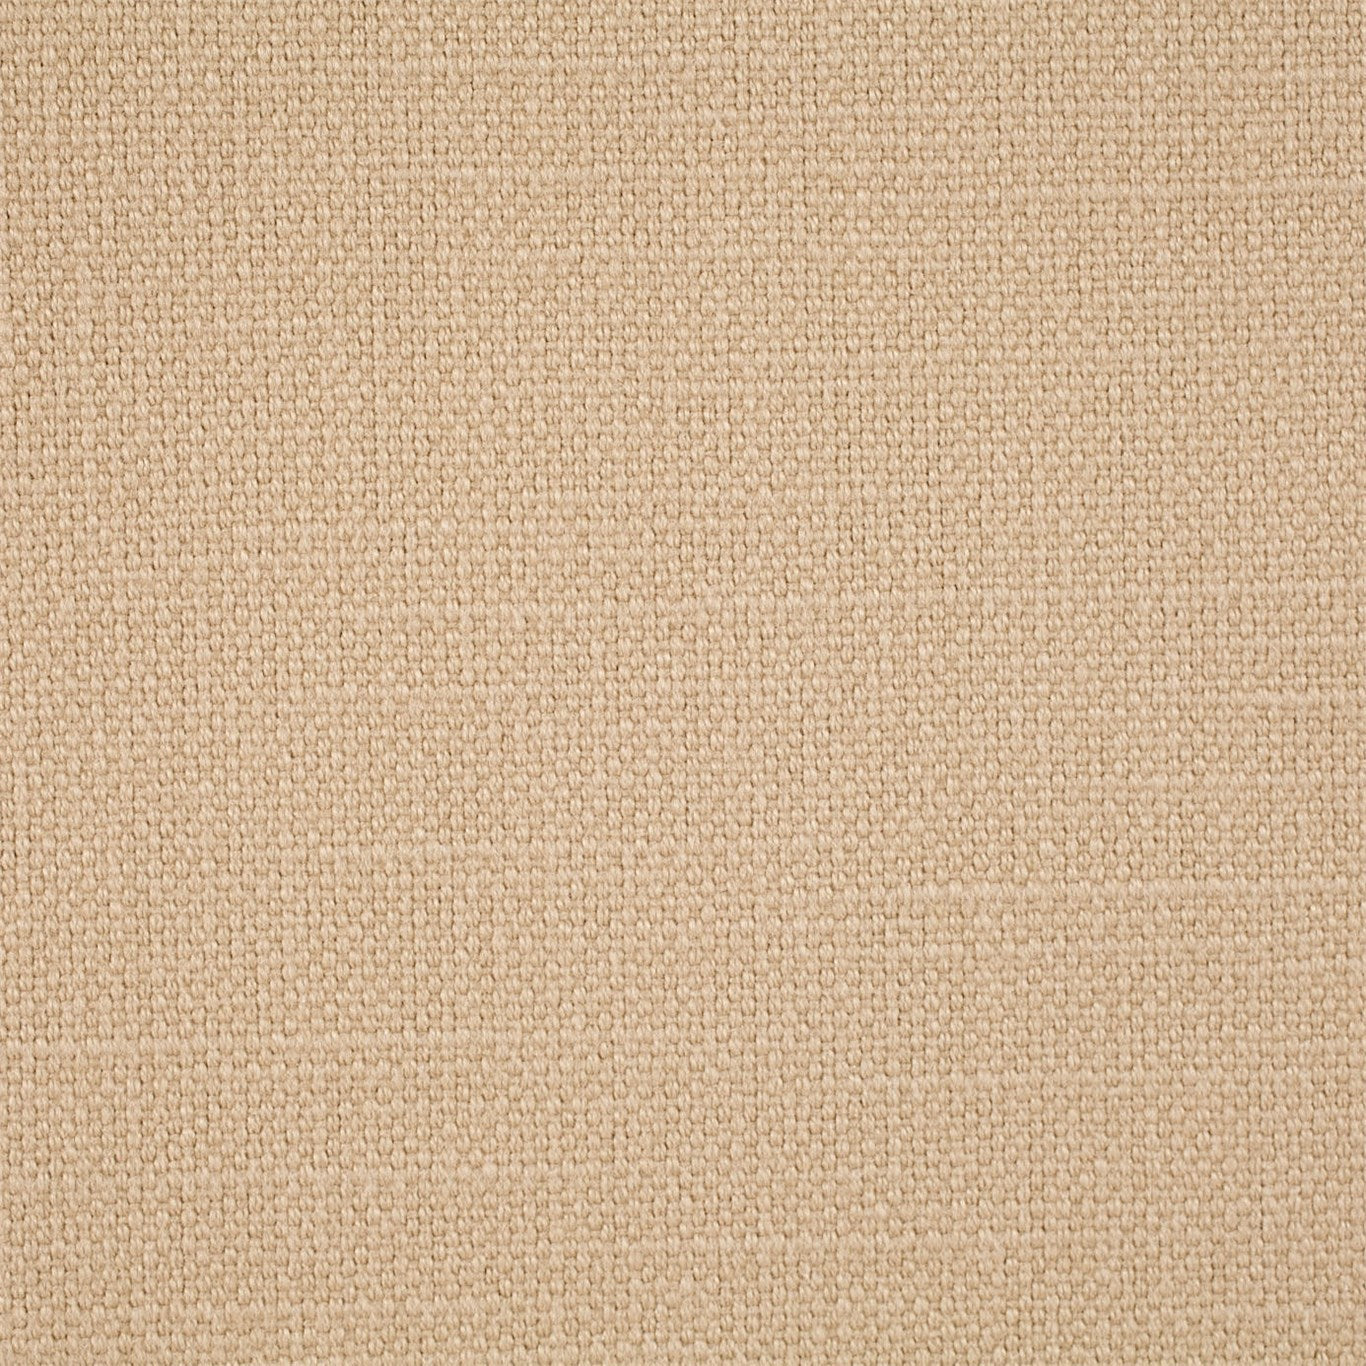 Arley Fabric by Sanderson - DALY245806 - Beige